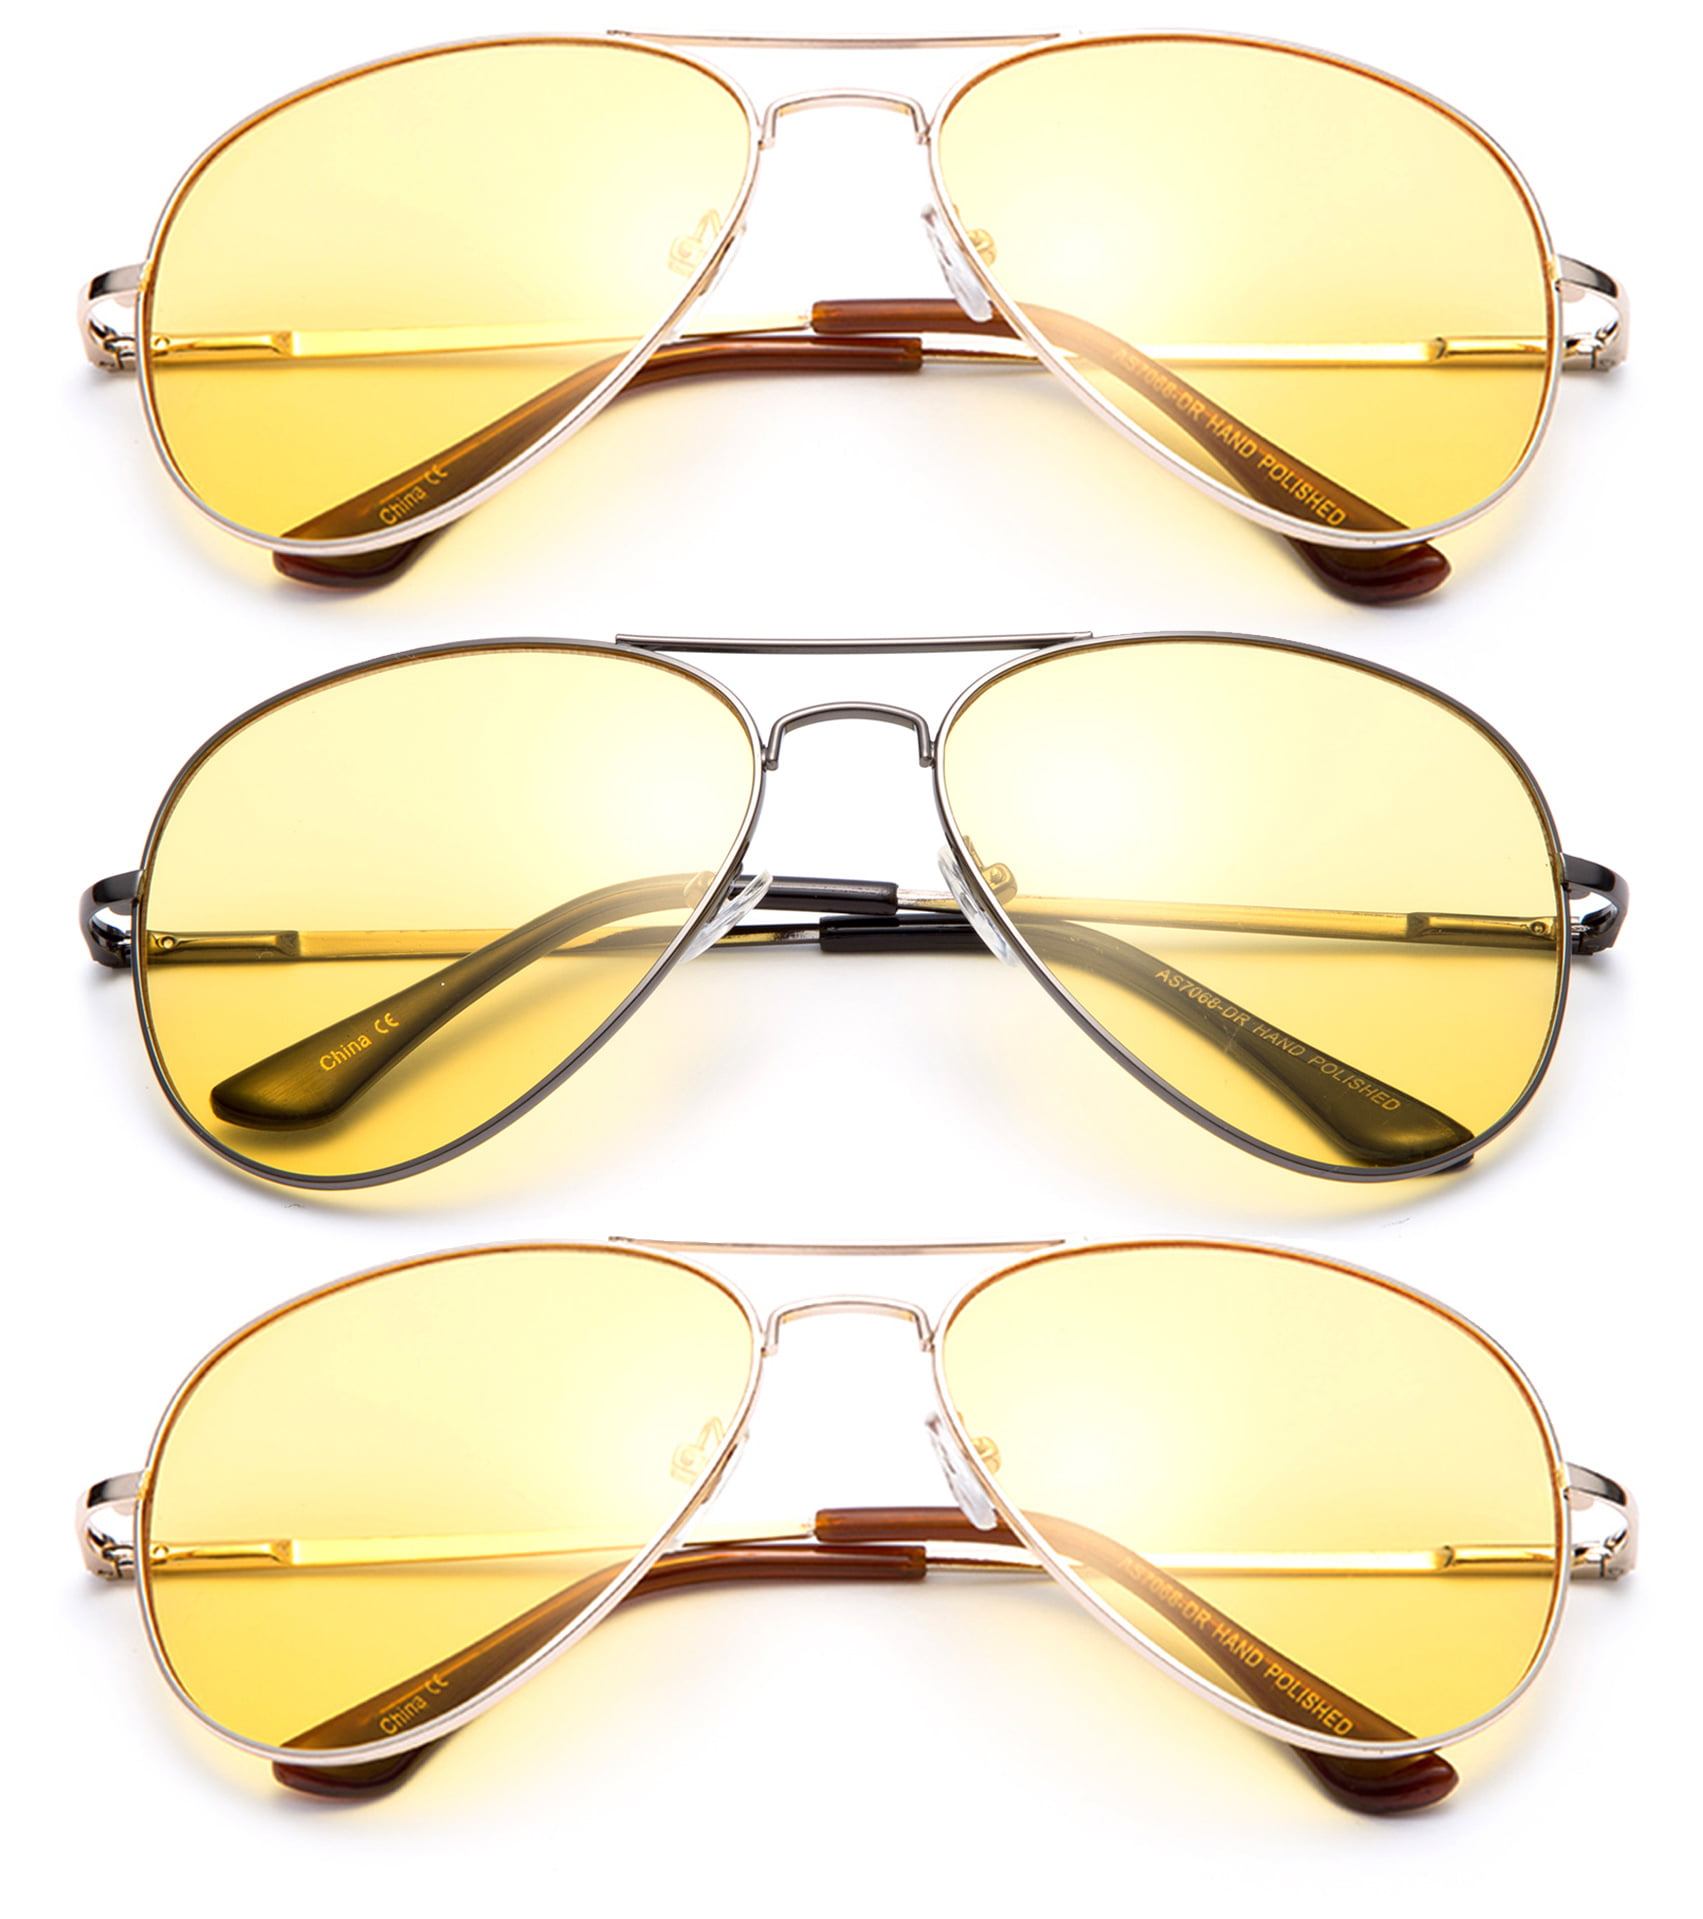 Polarized Aviator Sunglasses Spring Hinge New Classic Metal Frame Driving Lens 